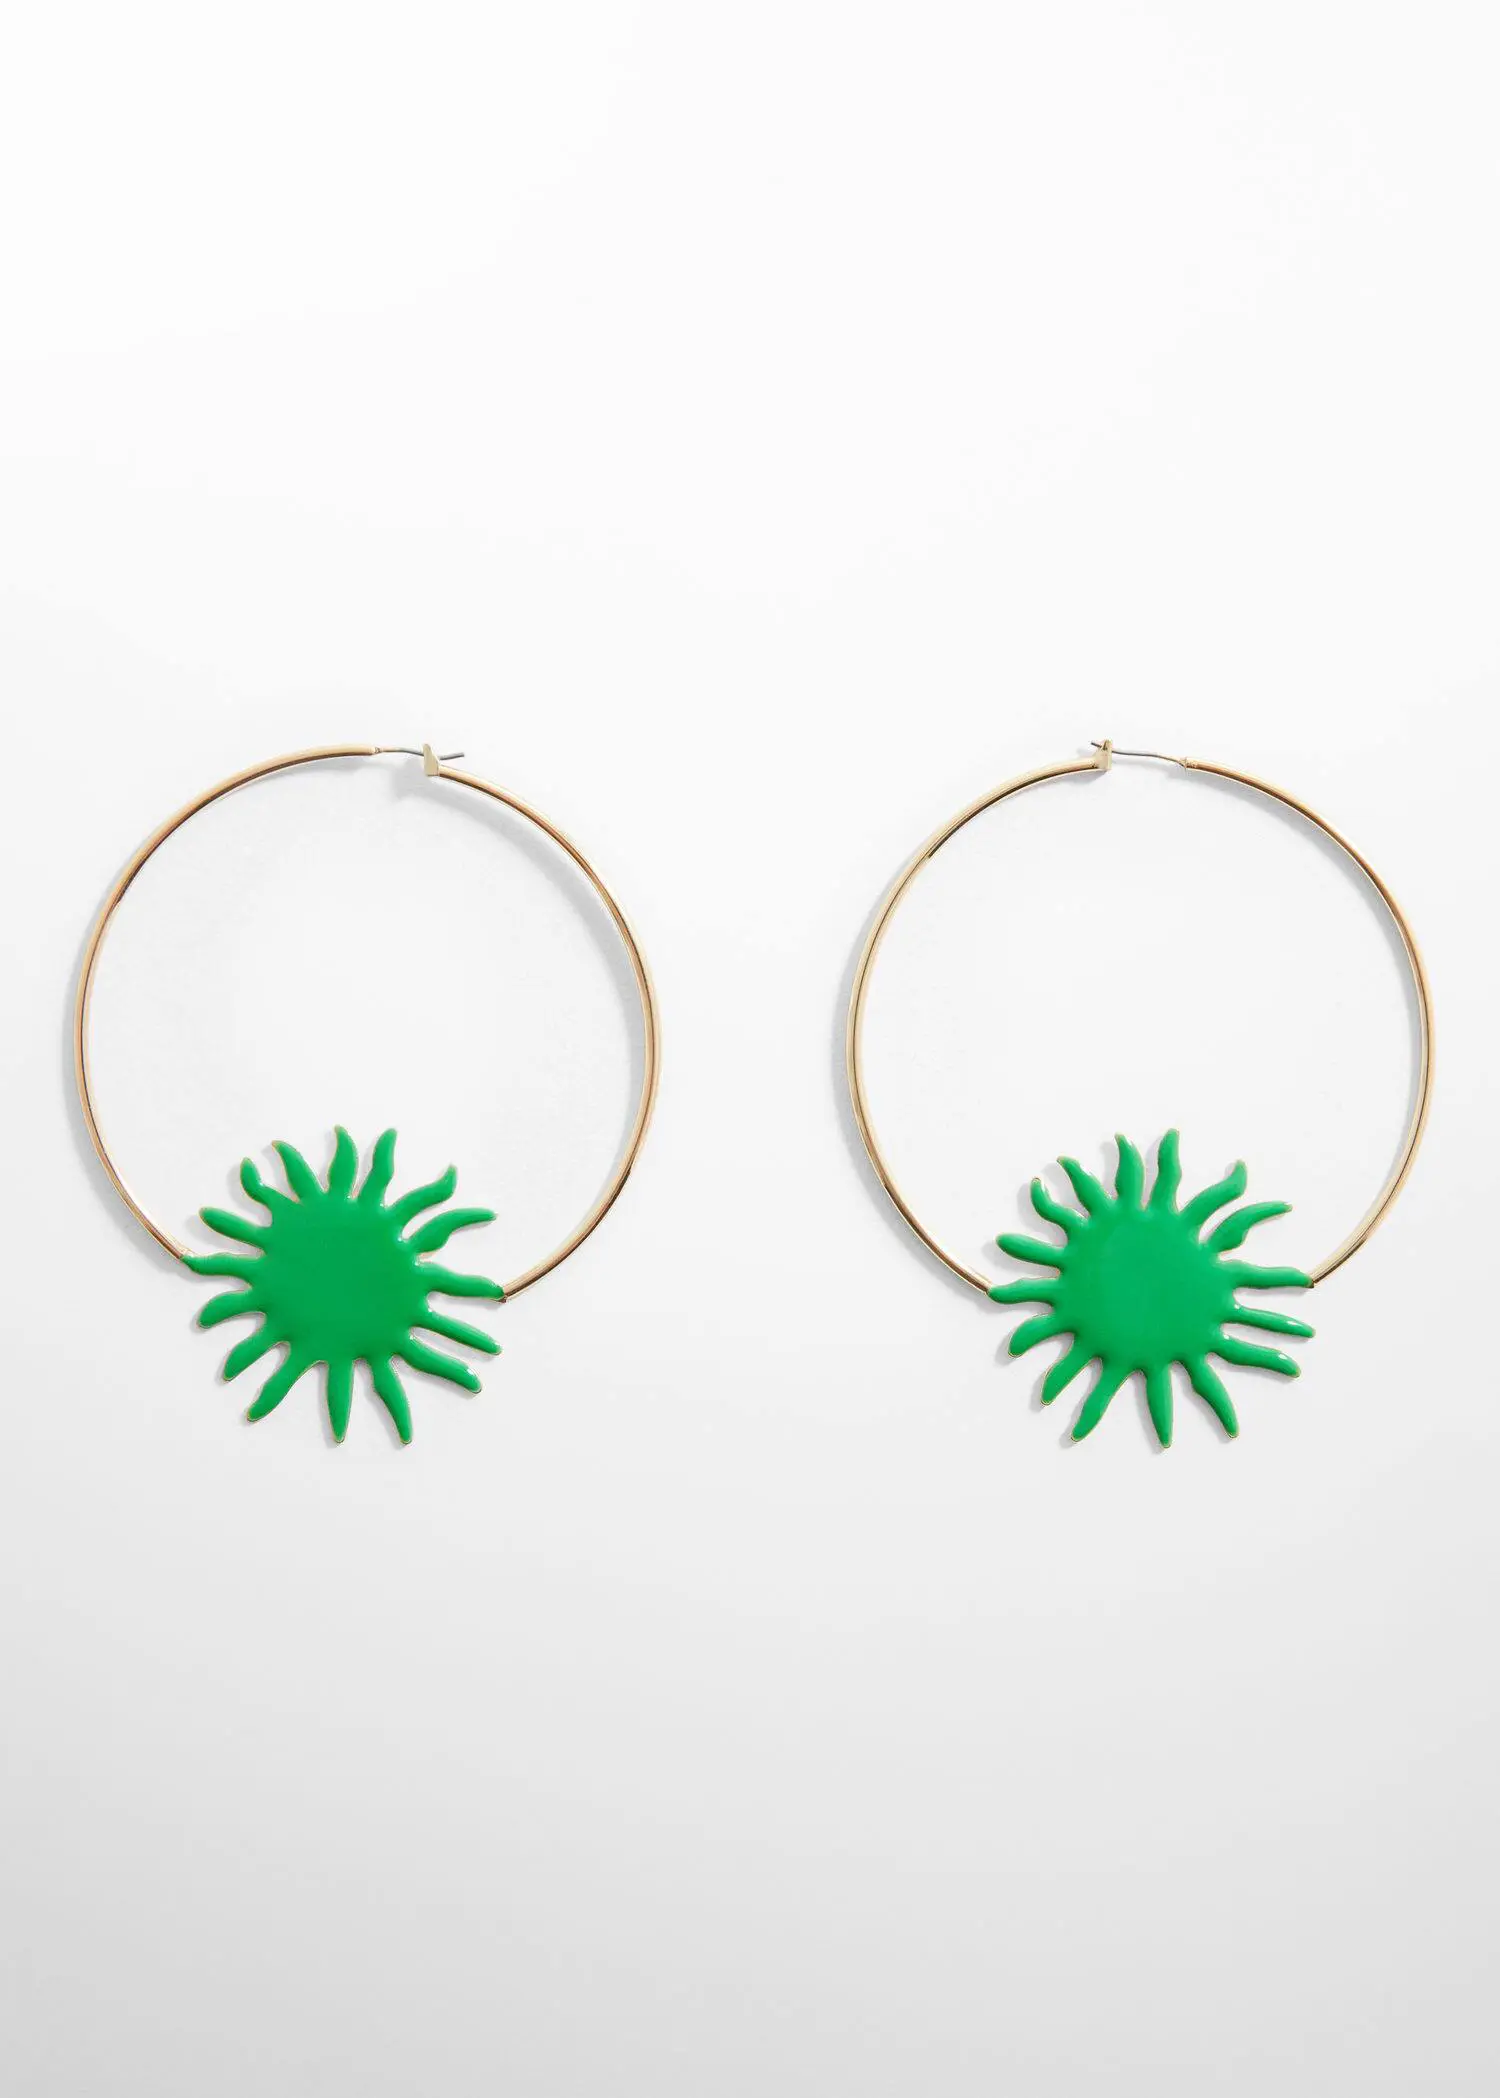 Mango Maxi hoop earrings. a pair of green earrings hanging on a white wall. 